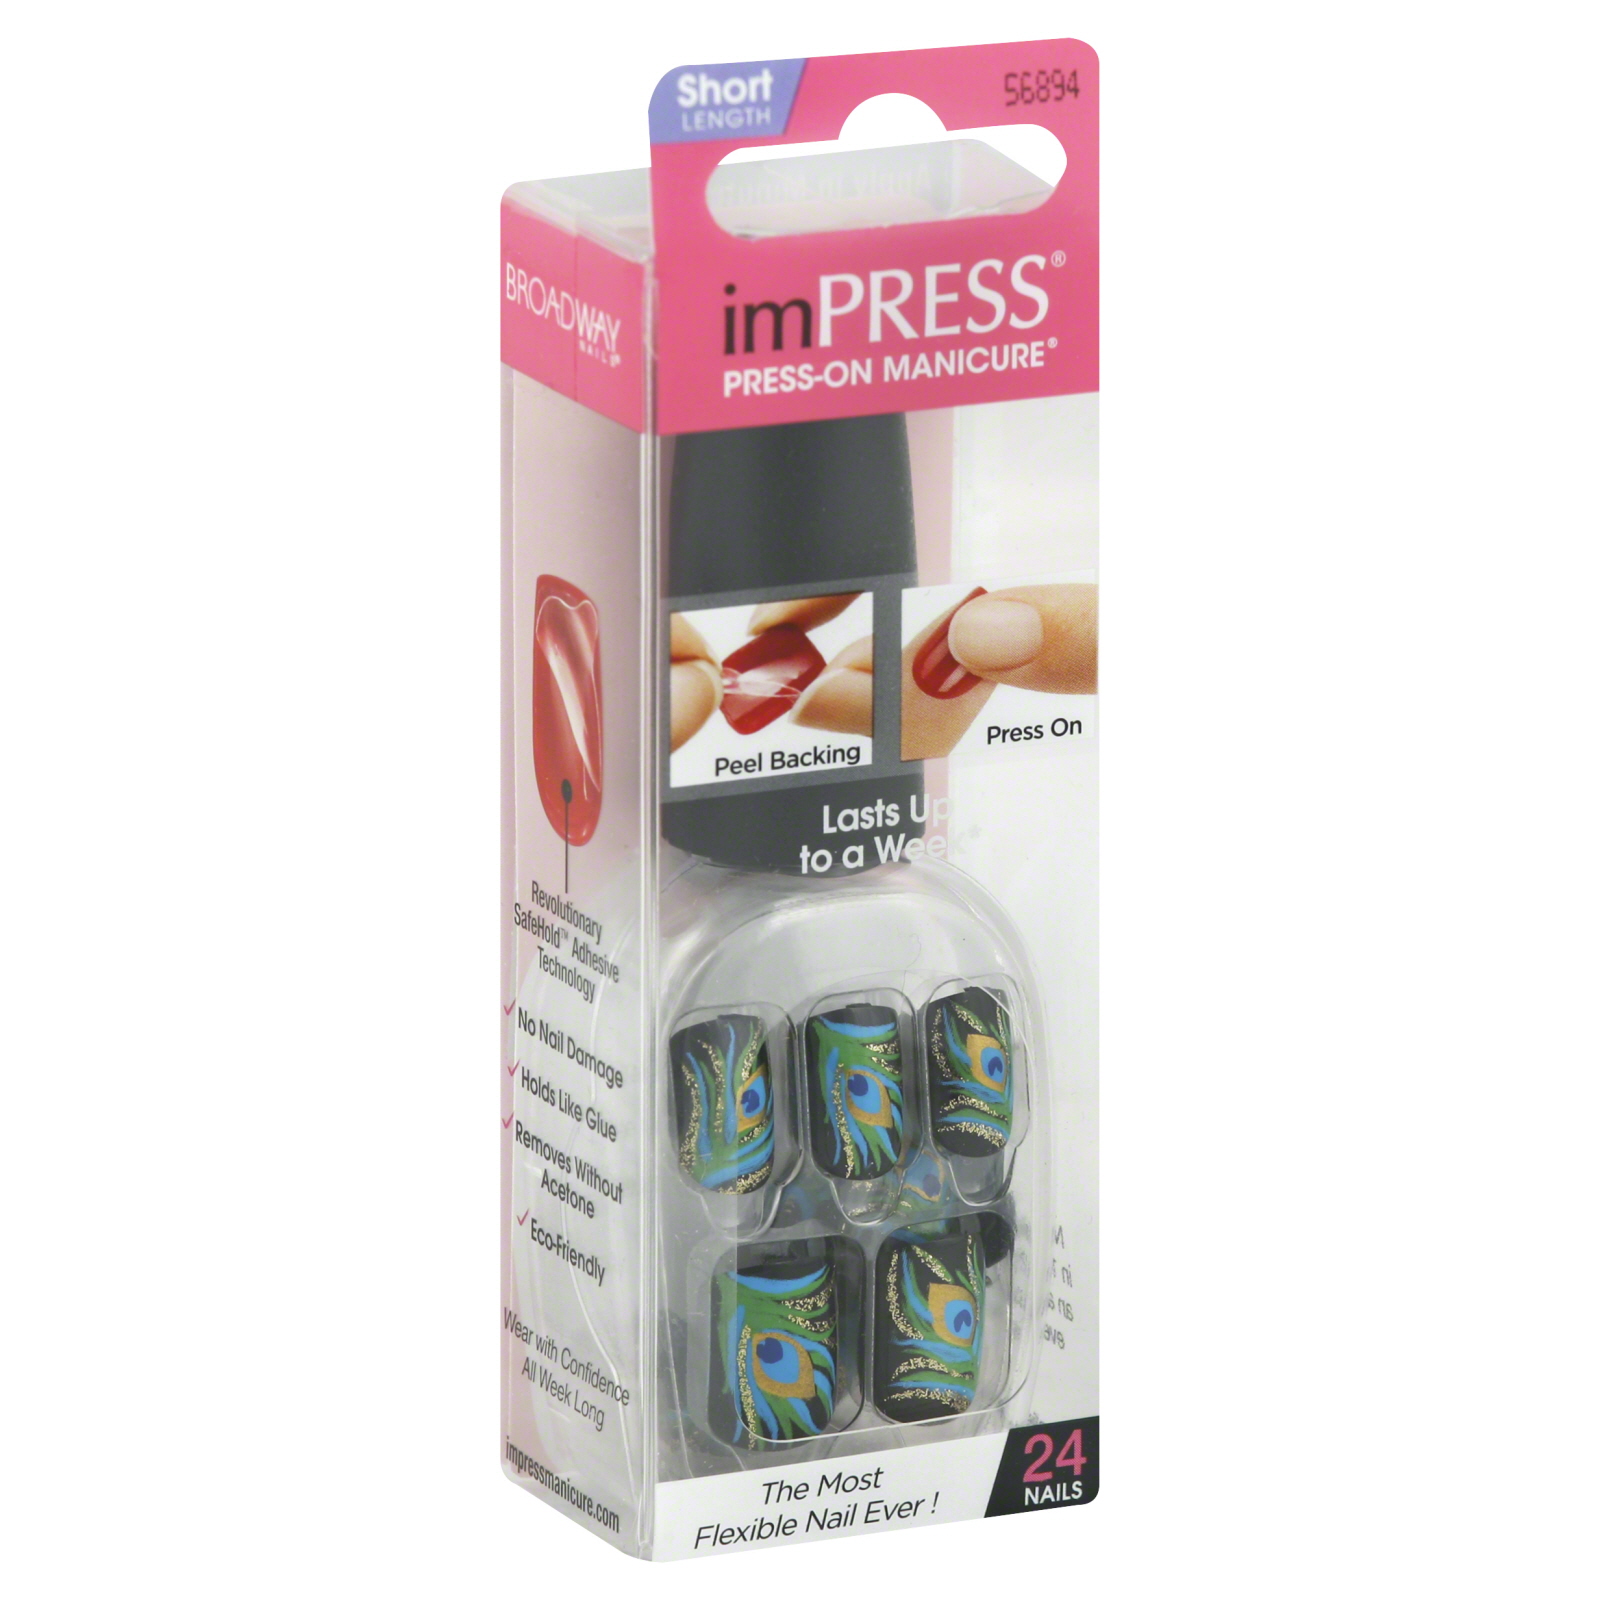 Broadway Nails imPress Press-On Manicure, Space Cadet, D090, 1 kit